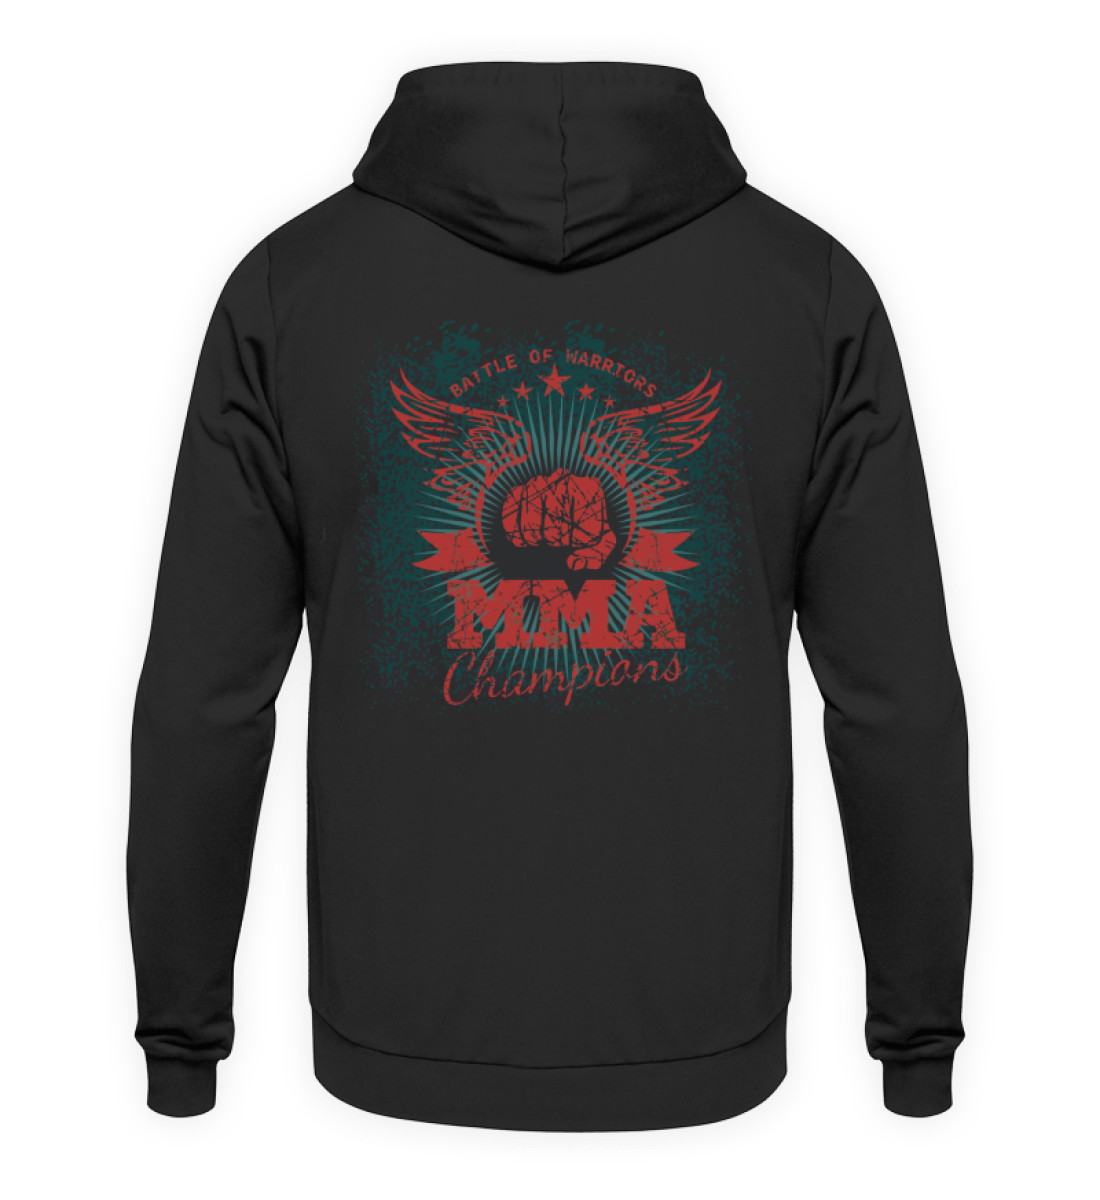 COMA Team - MMA Champions rot - Unisex Kapuzenpullover Hoodie-1624